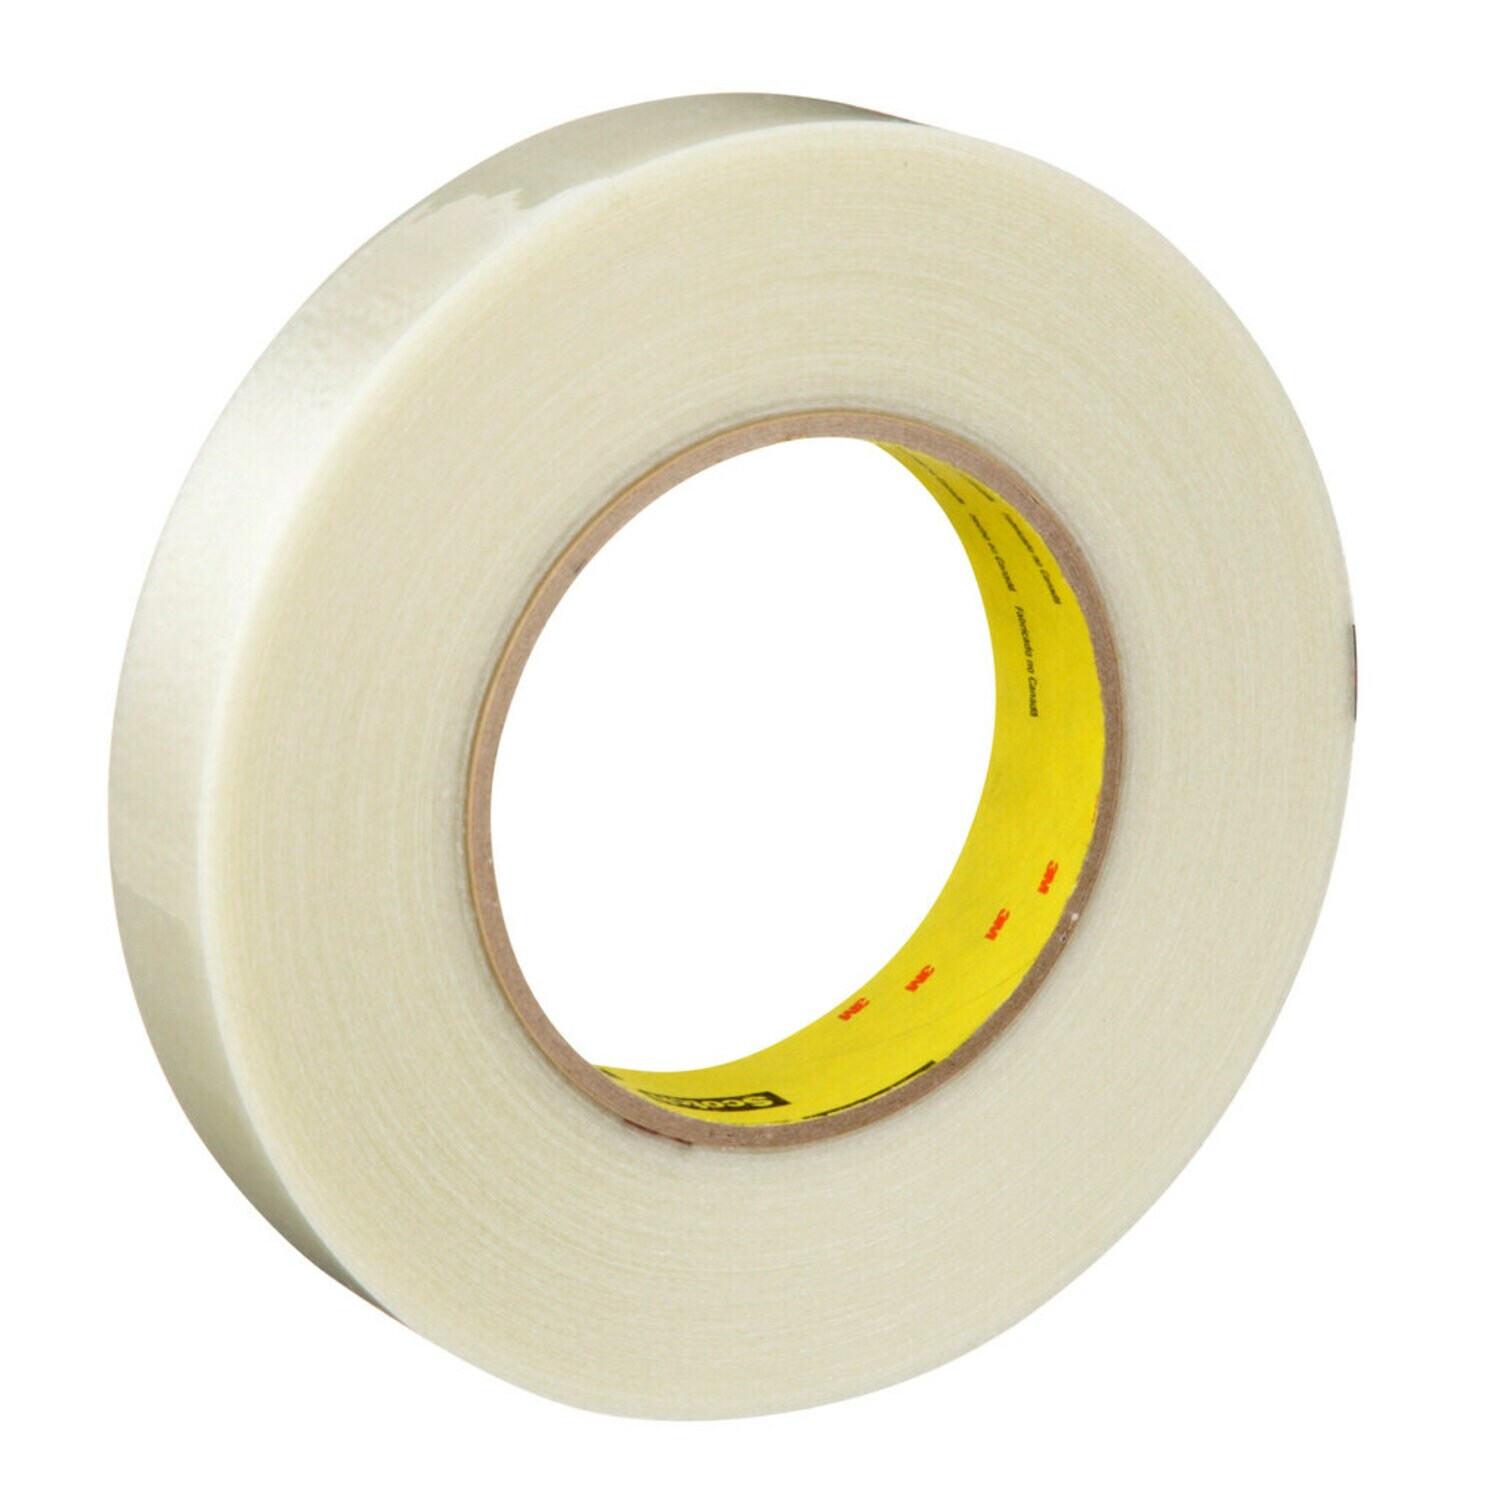 7000138160 - Scotch Filament Tape 8919MSR, Clear, 12 mm x 55 m, 7 mil, 72 rolls per
case